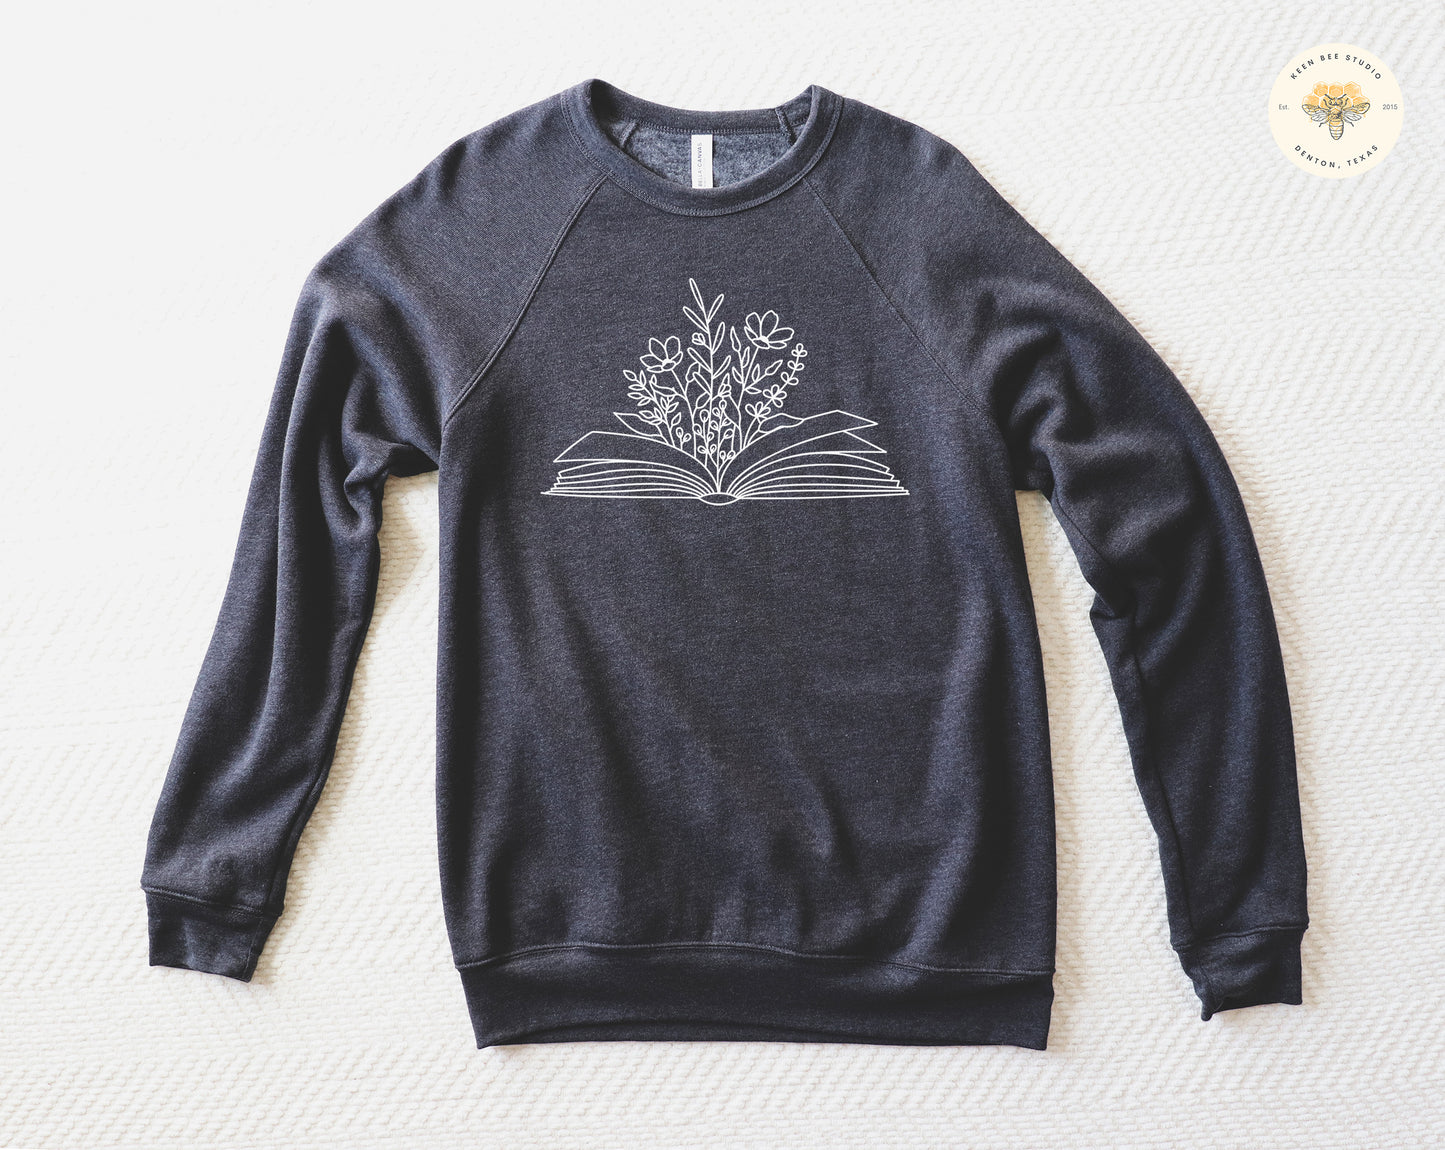 Cozy Reading Sweatshirt - Wildflowers and Books - Heather Navy